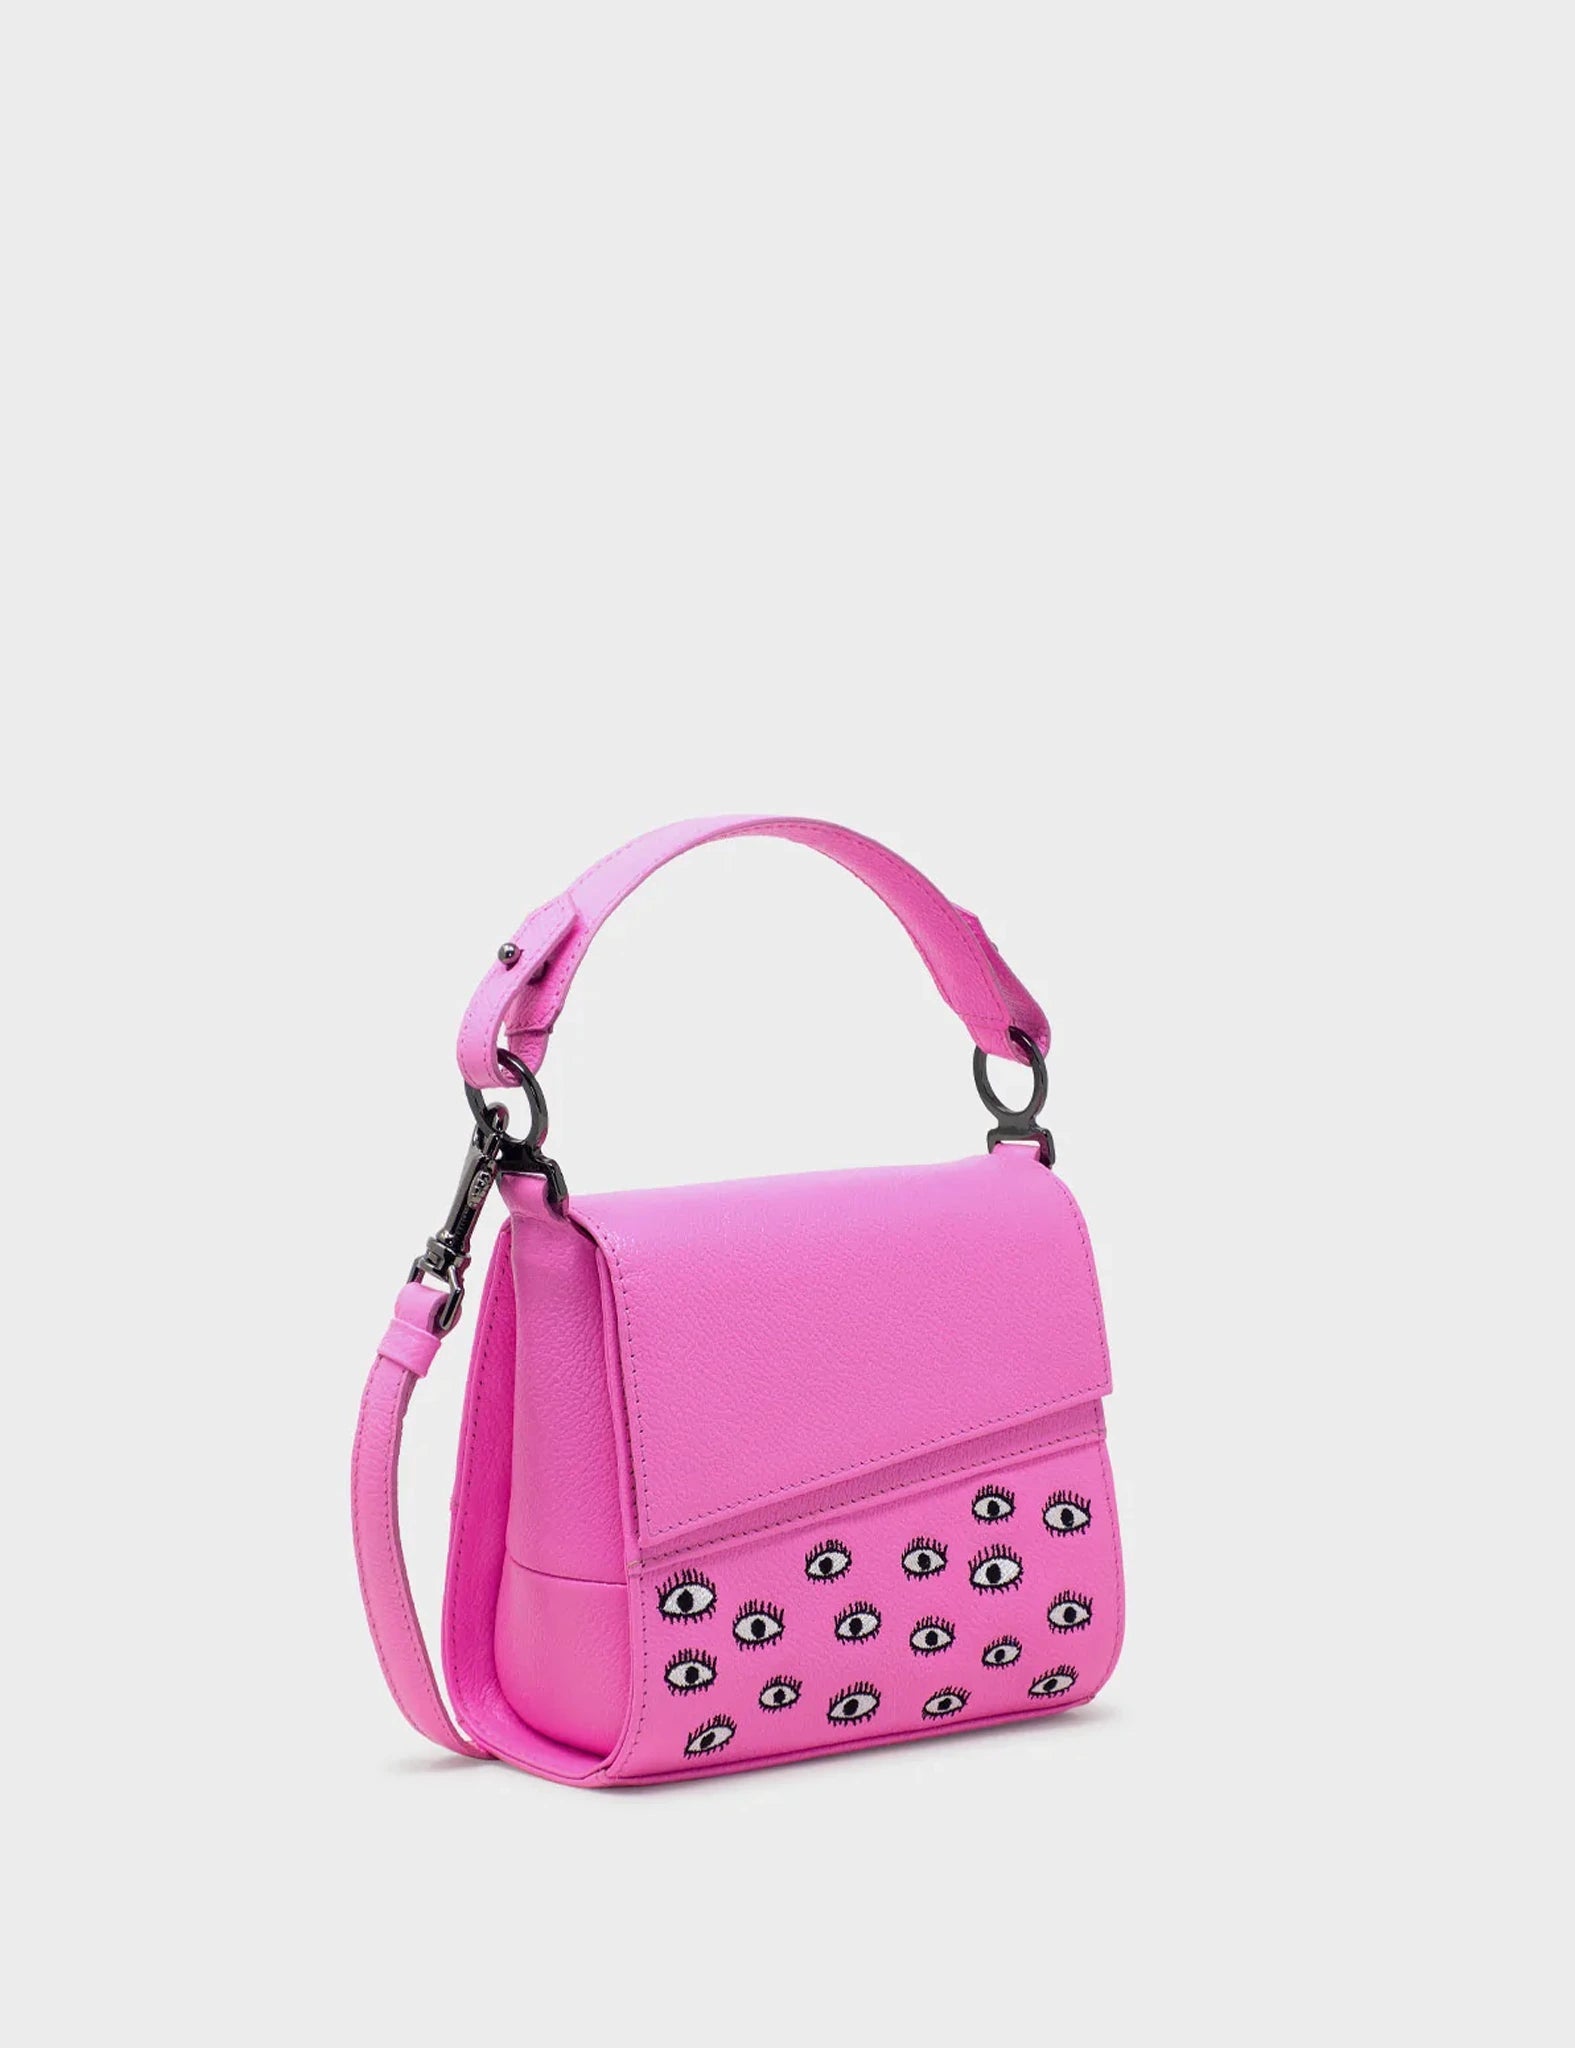 Anastasio Micro Crossbody Handbag Bubblegum Pink Leather - Eyes Embroidery - Front corner angle view